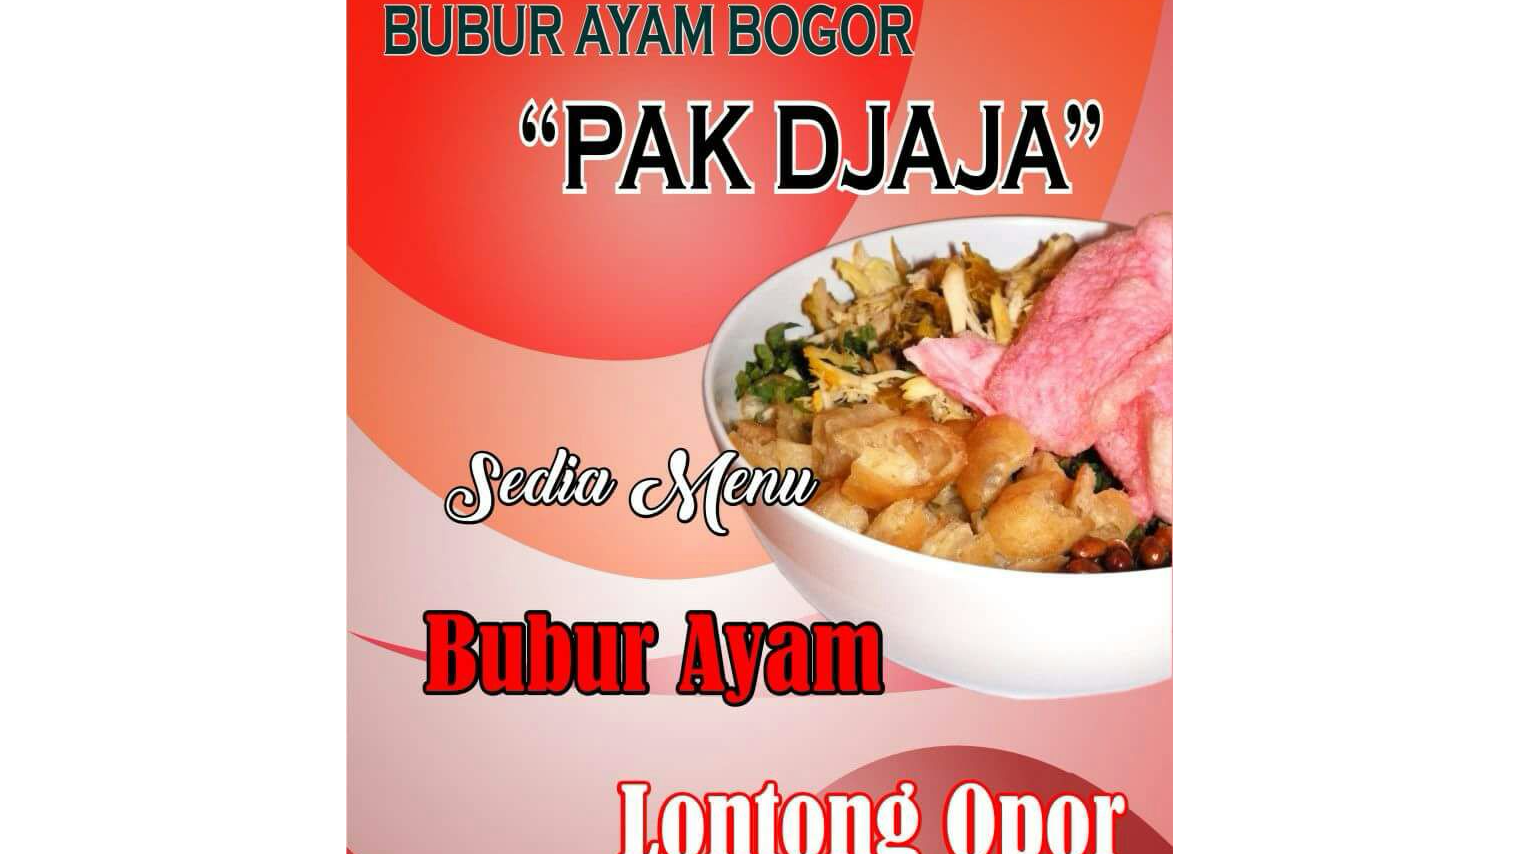 Bubur Ayam Bogor "Pak Djadja", Batam Centre